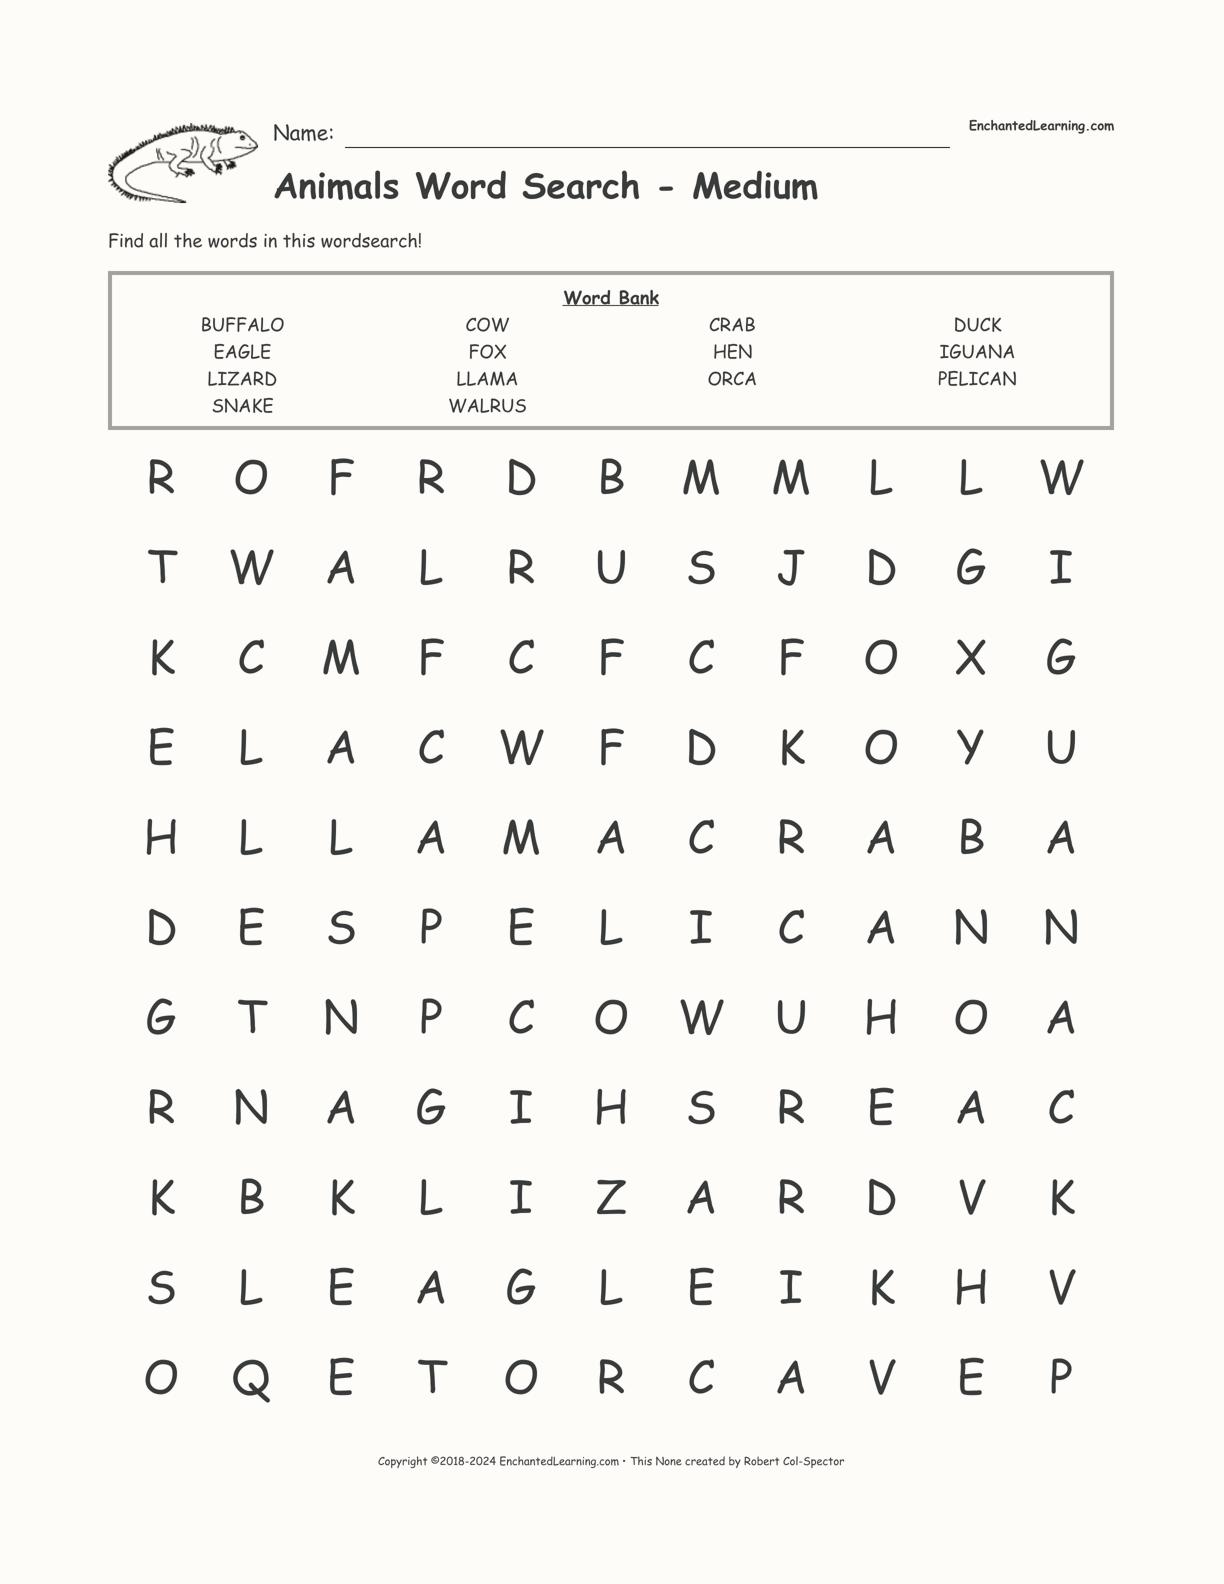 Animals Word Search - Medium interactive worksheet page 1